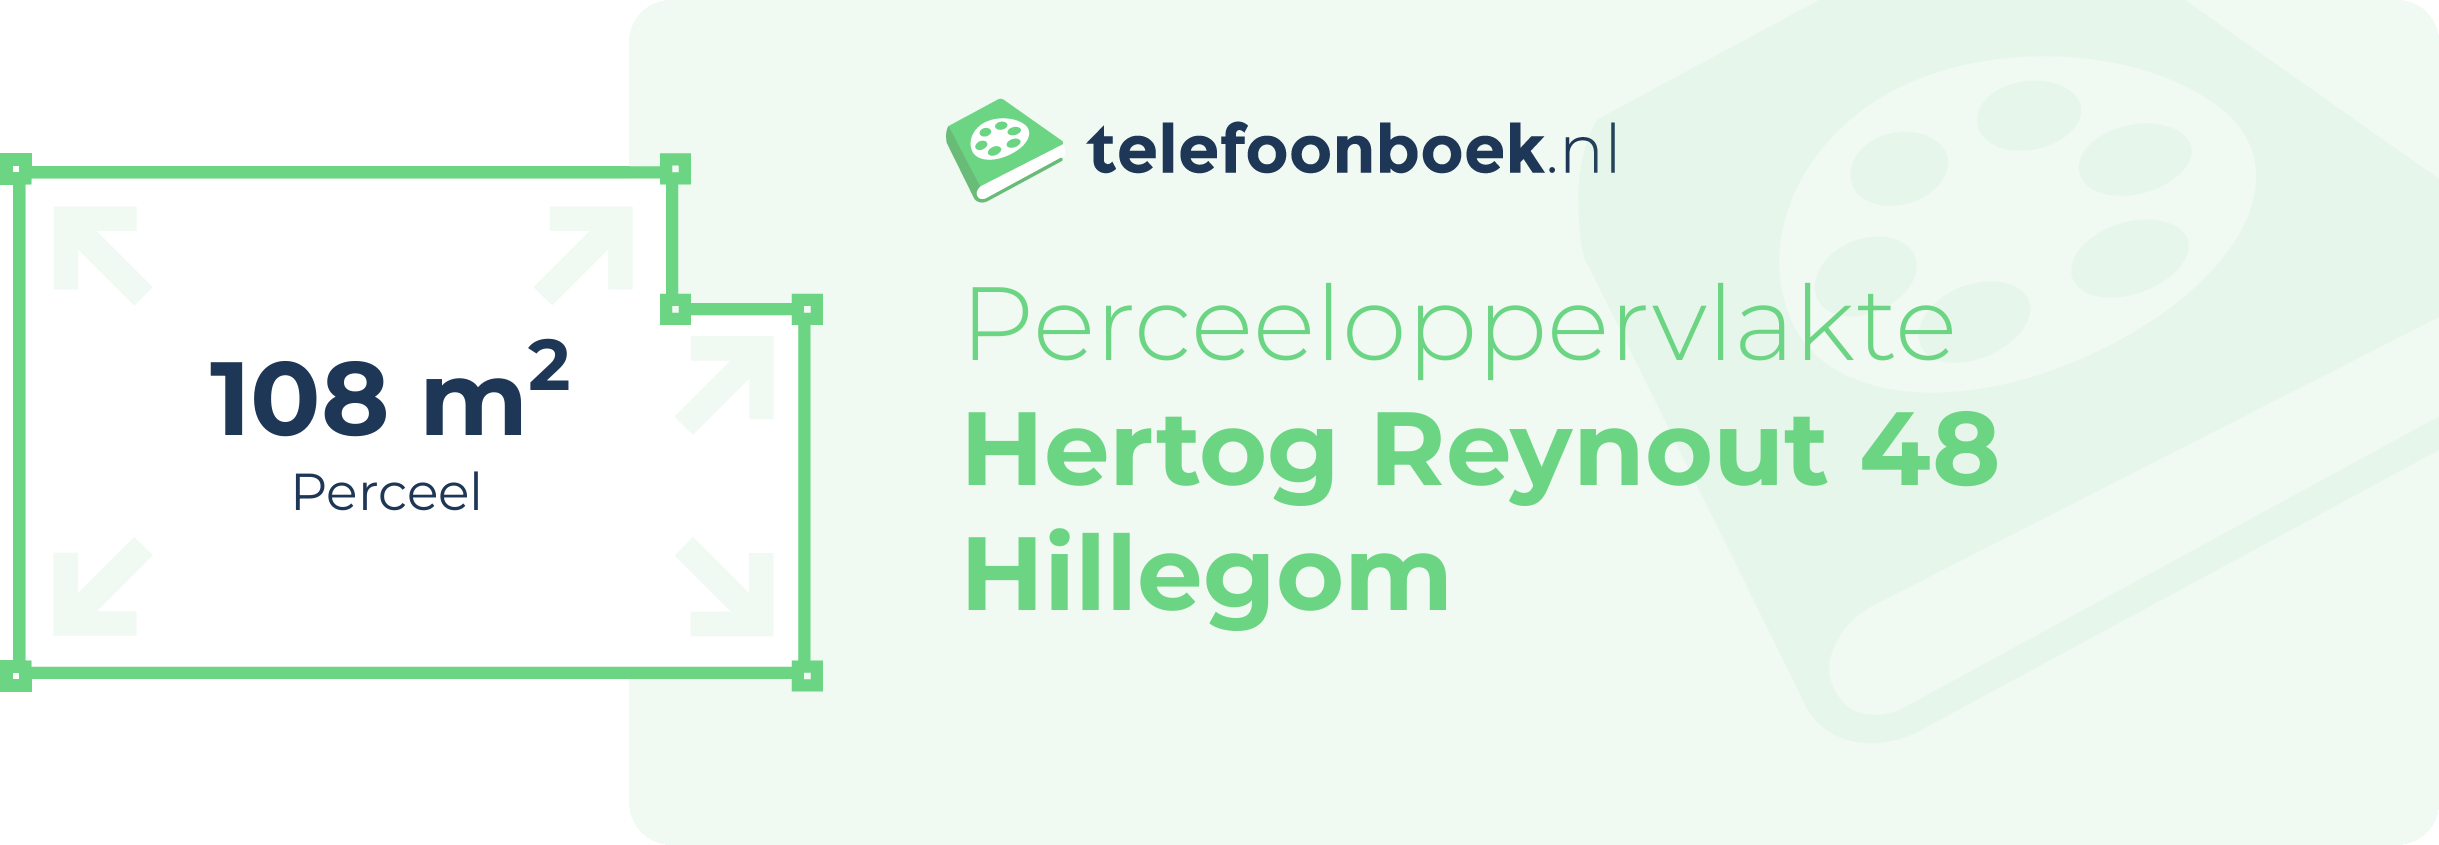 Perceeloppervlakte Hertog Reynout 48 Hillegom